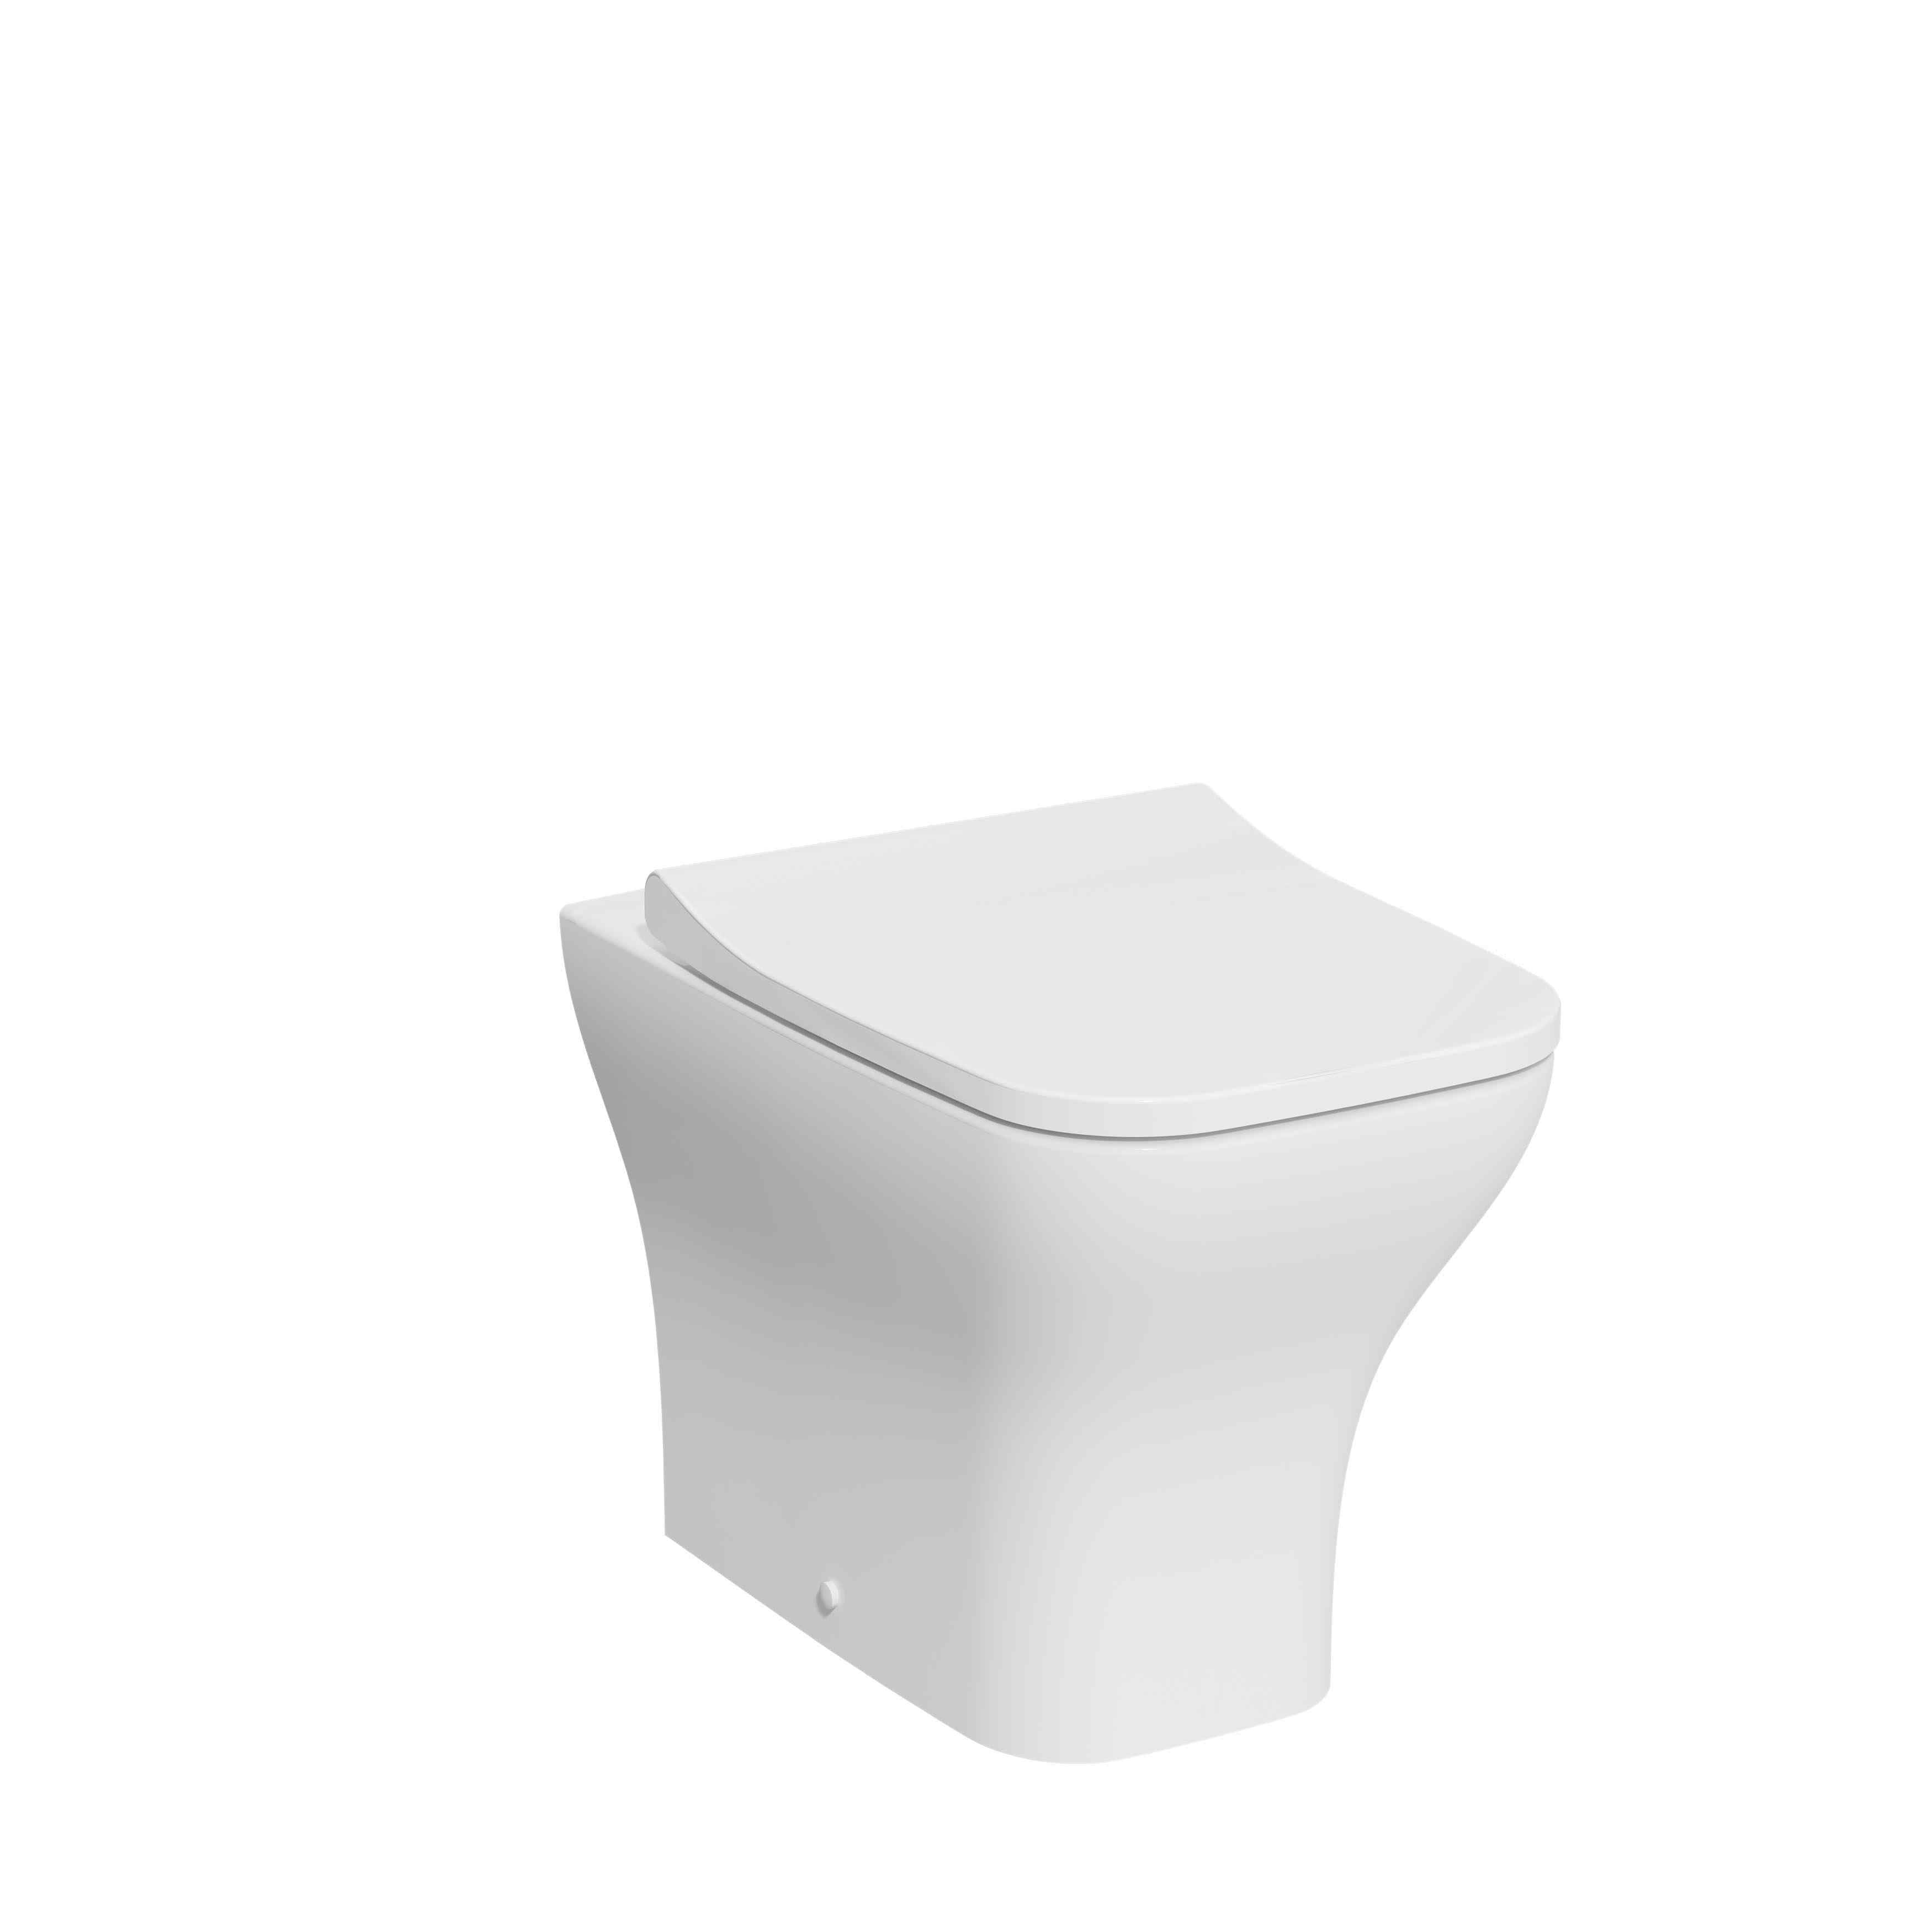 Purity Silver Oak WC Unit: Stylish Toilet and Basin Combination